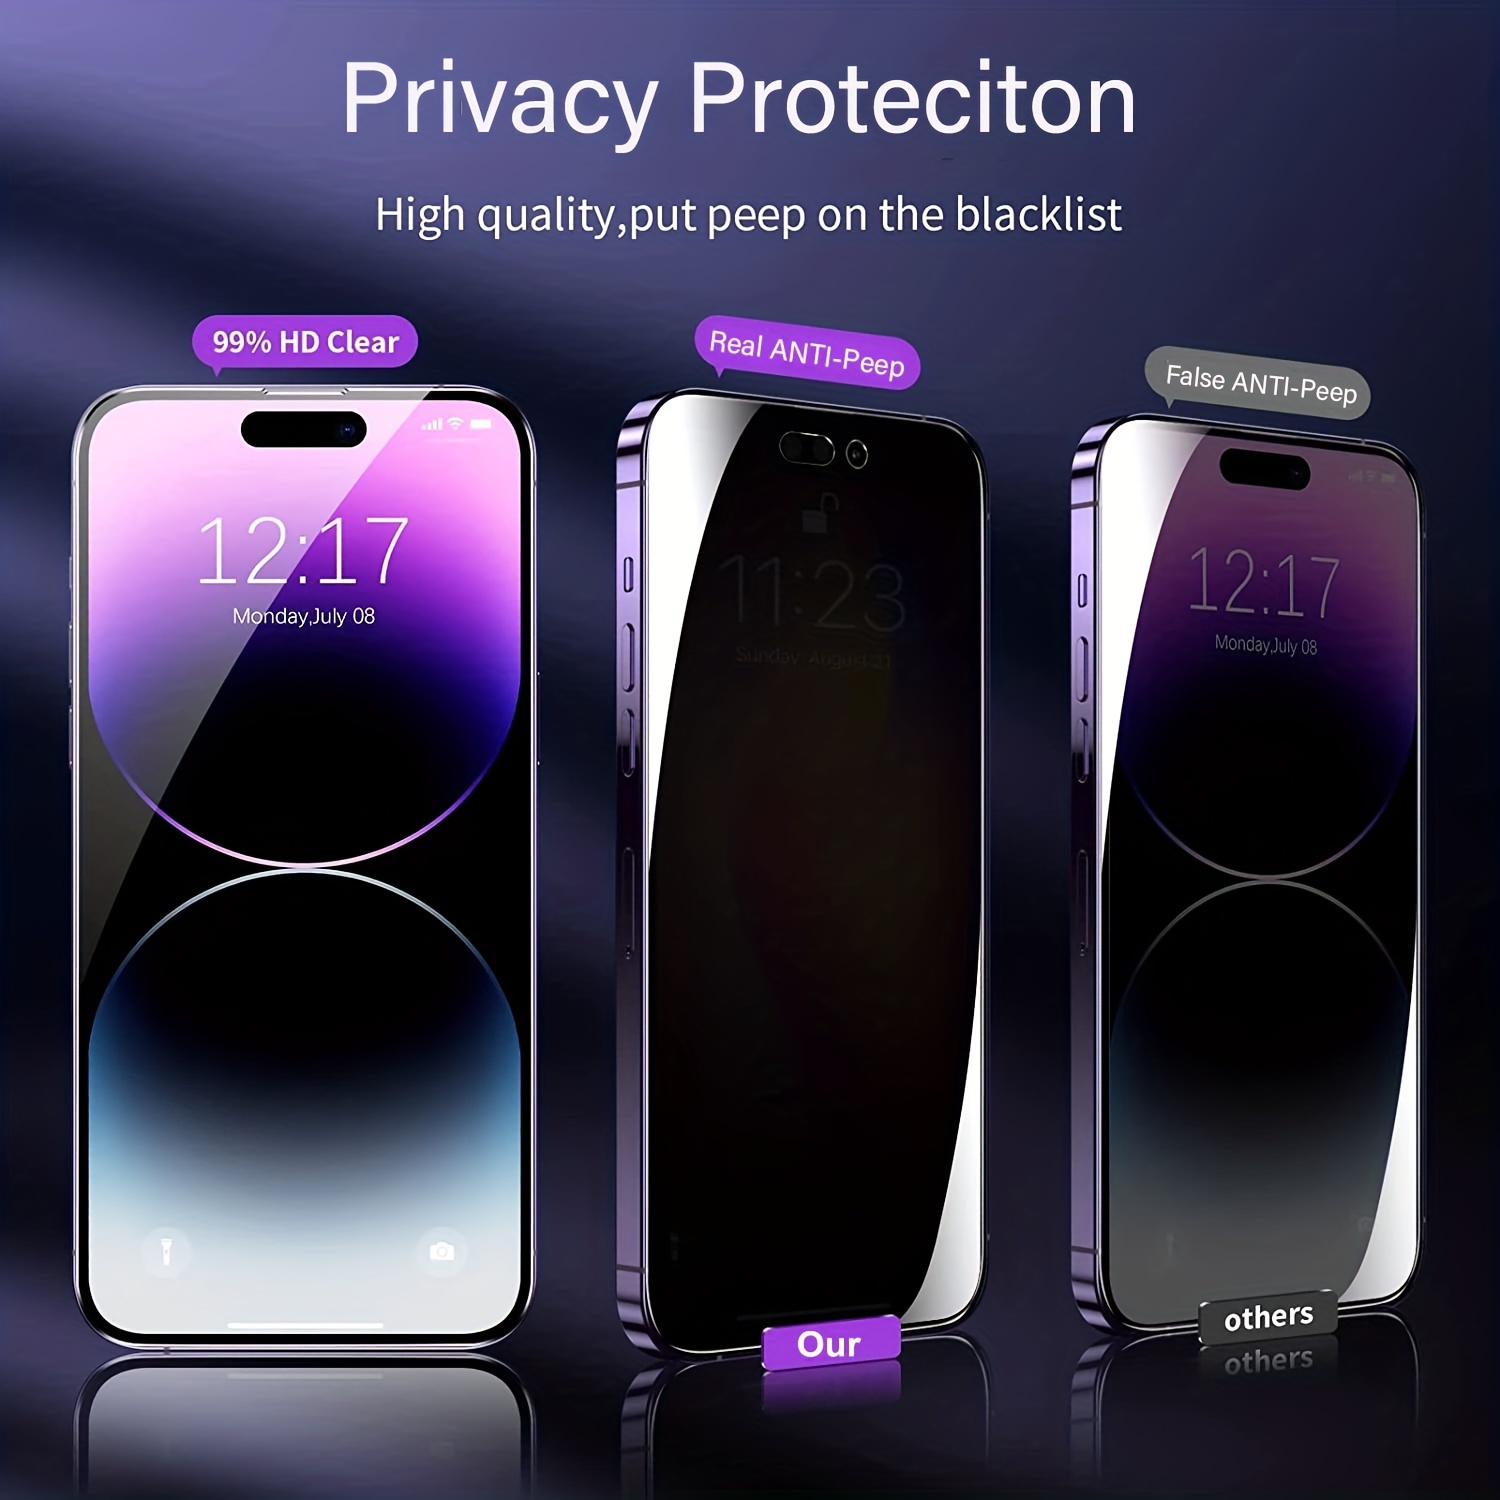 Protector Pantalla 3 piezas para Lente de Camara Metal para iPhone 12 13 14  Pro